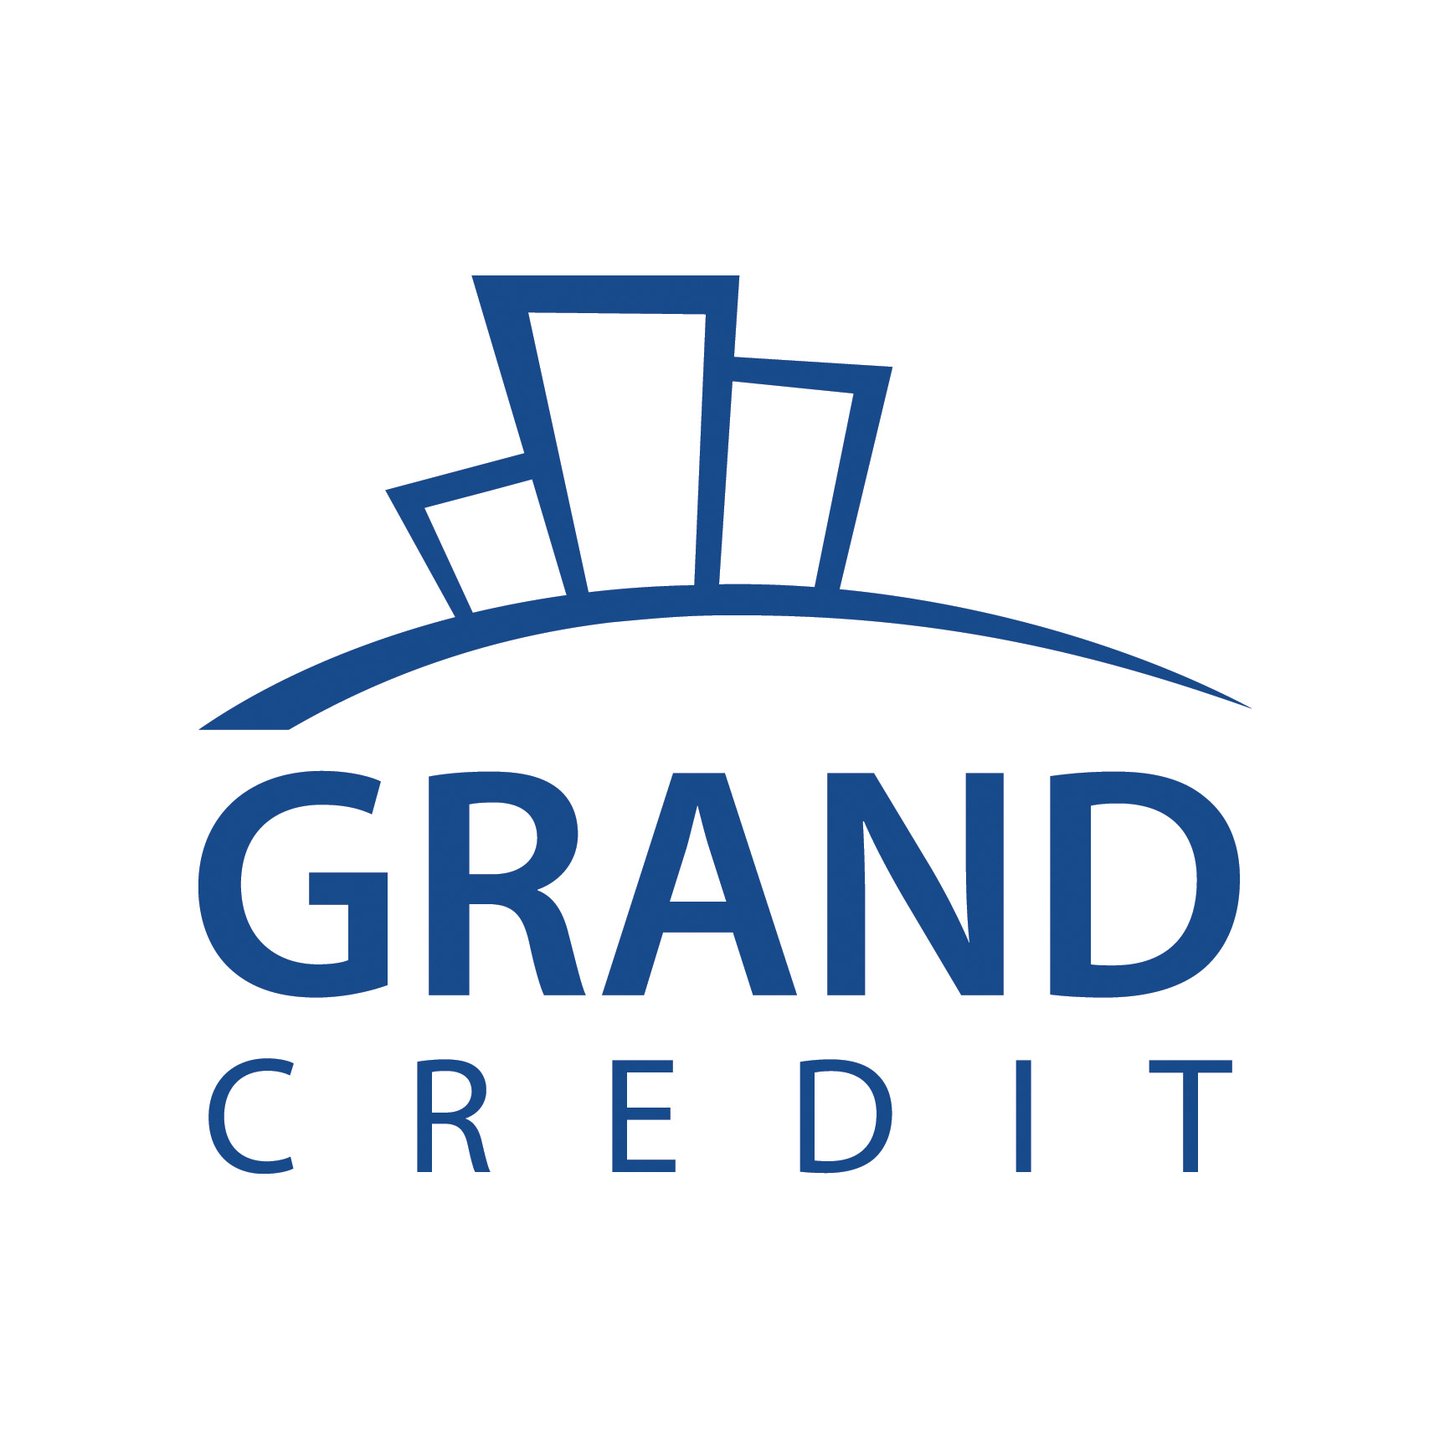 Grand Credit поддержал Телекинофорум в Ялте 2013